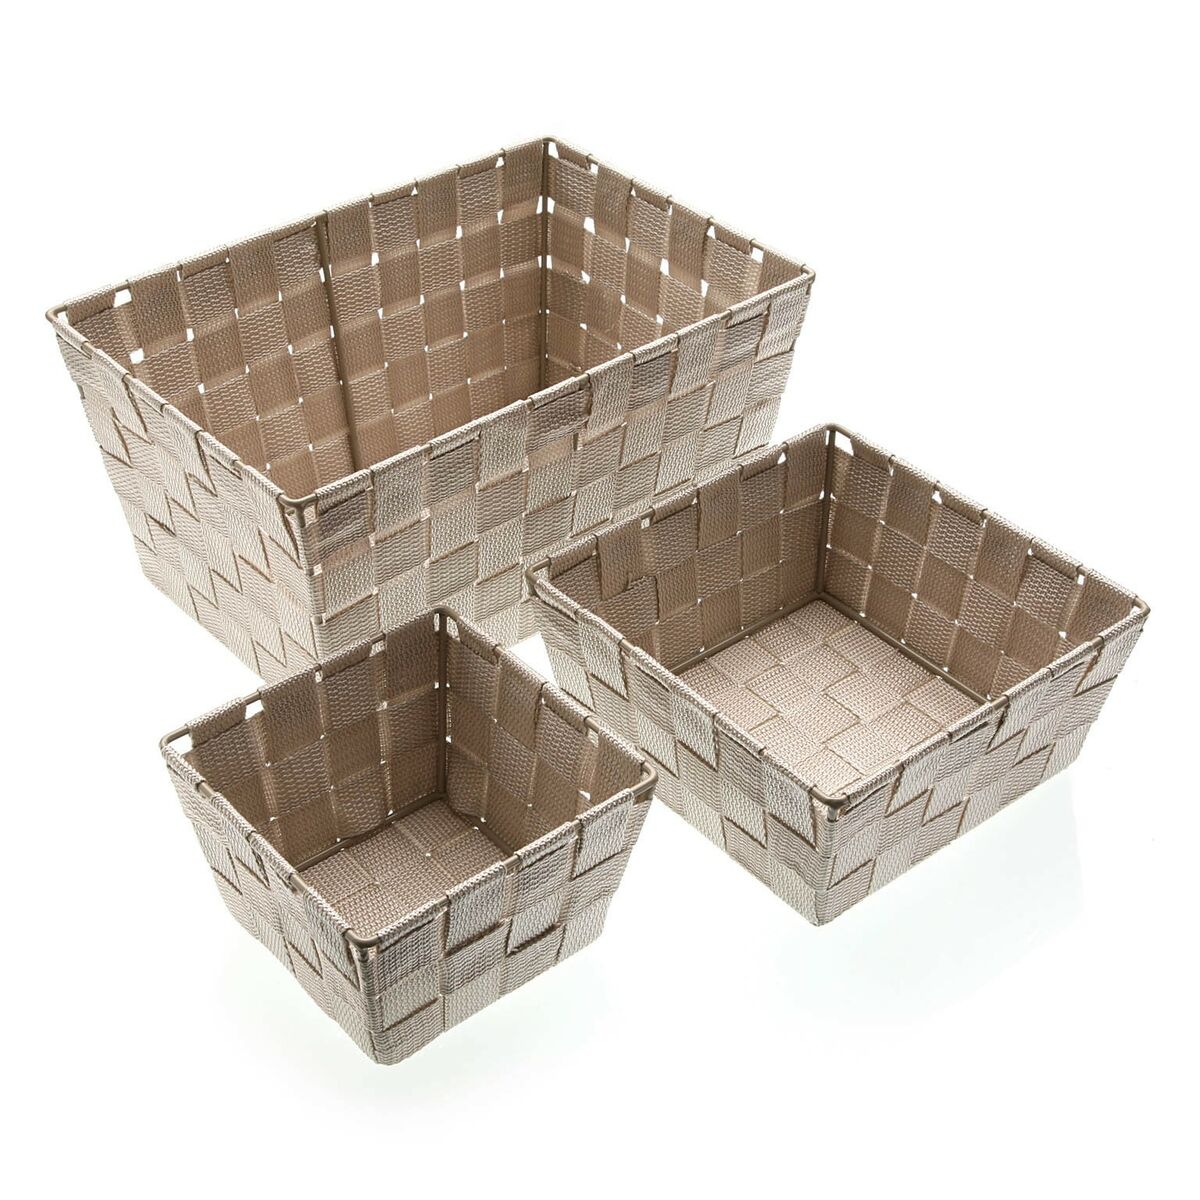 Multi-purpose basket Versa Beige 14 x 9 x 14 cm